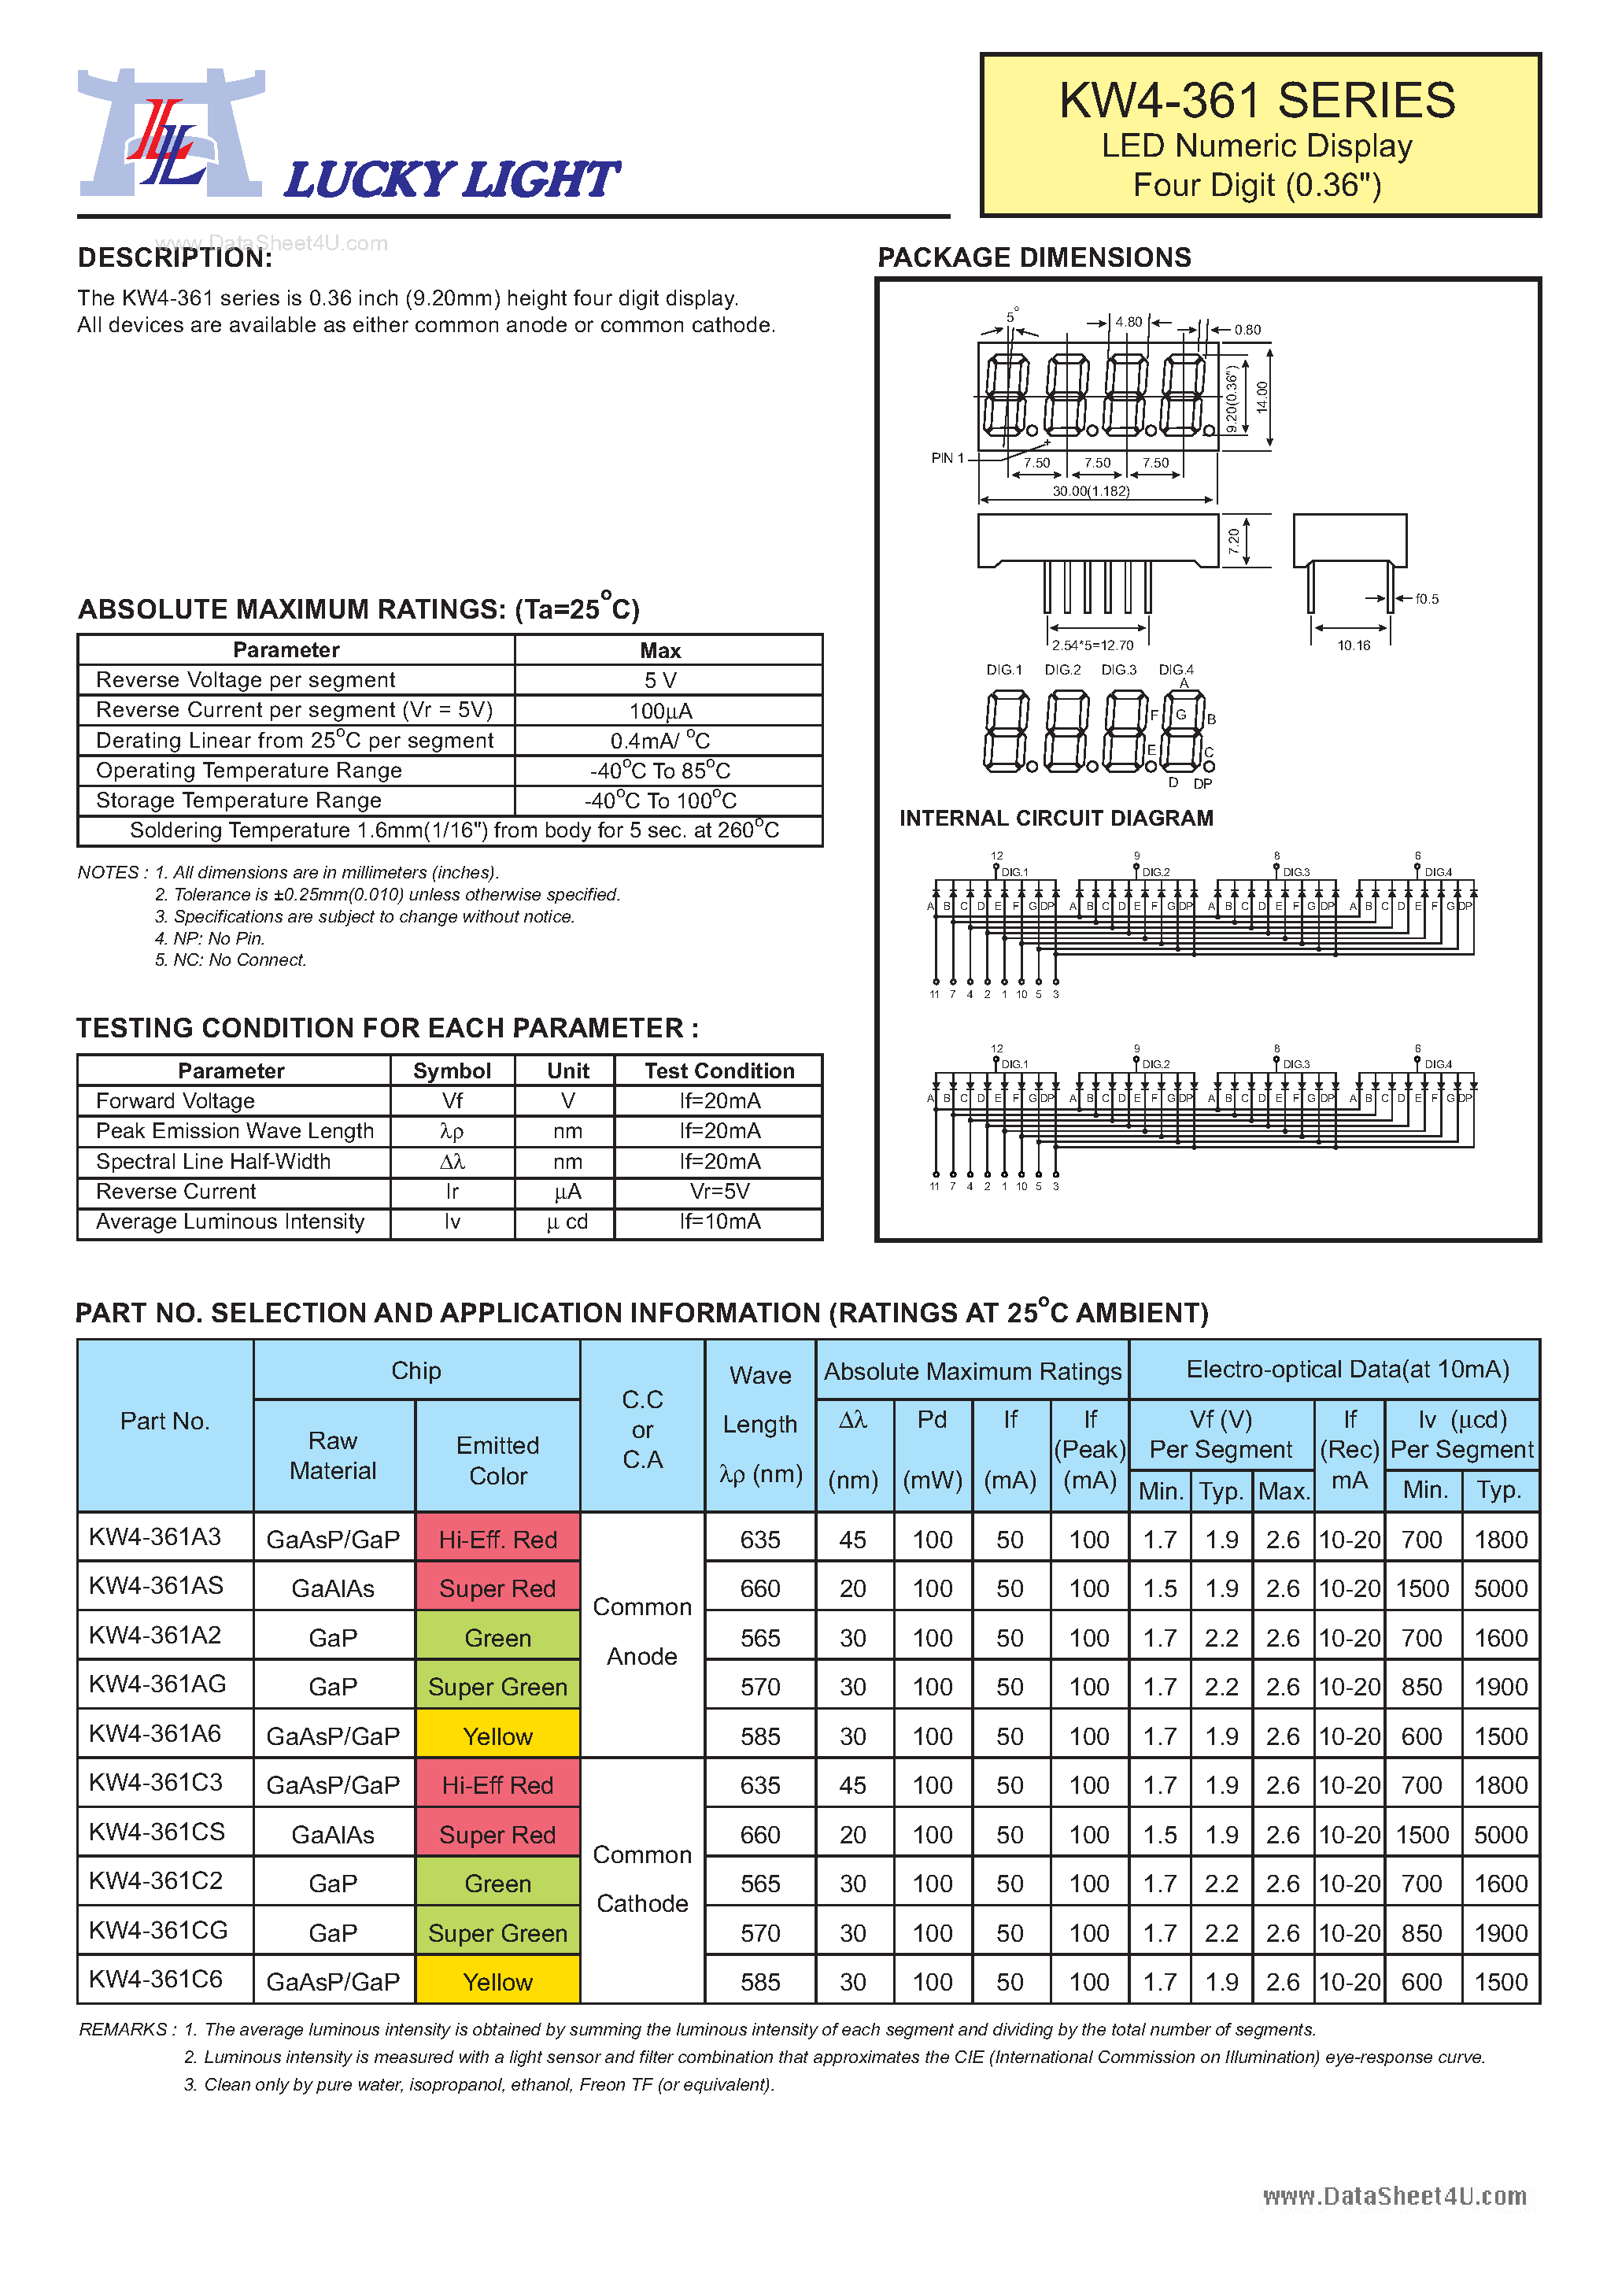 Datasheet KW4-361 - LED Numeric Display Four Digit page 1